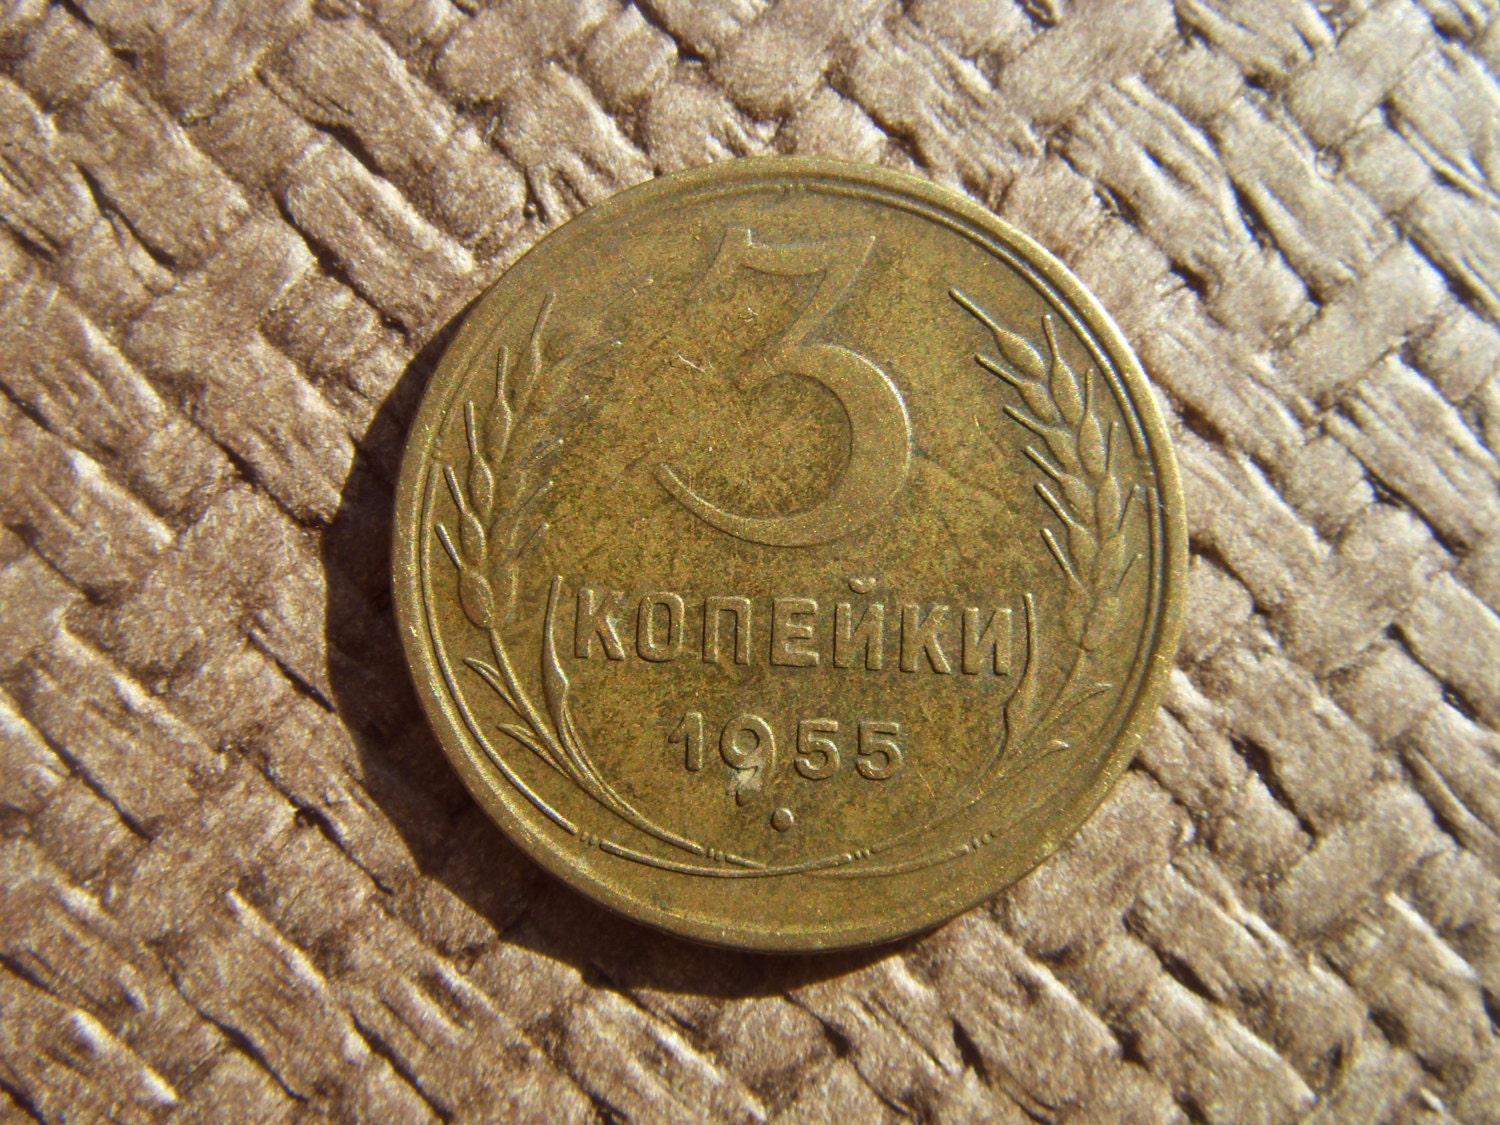 Vintage Soviet Coin 3 Kopecks of 1955 - Astra9